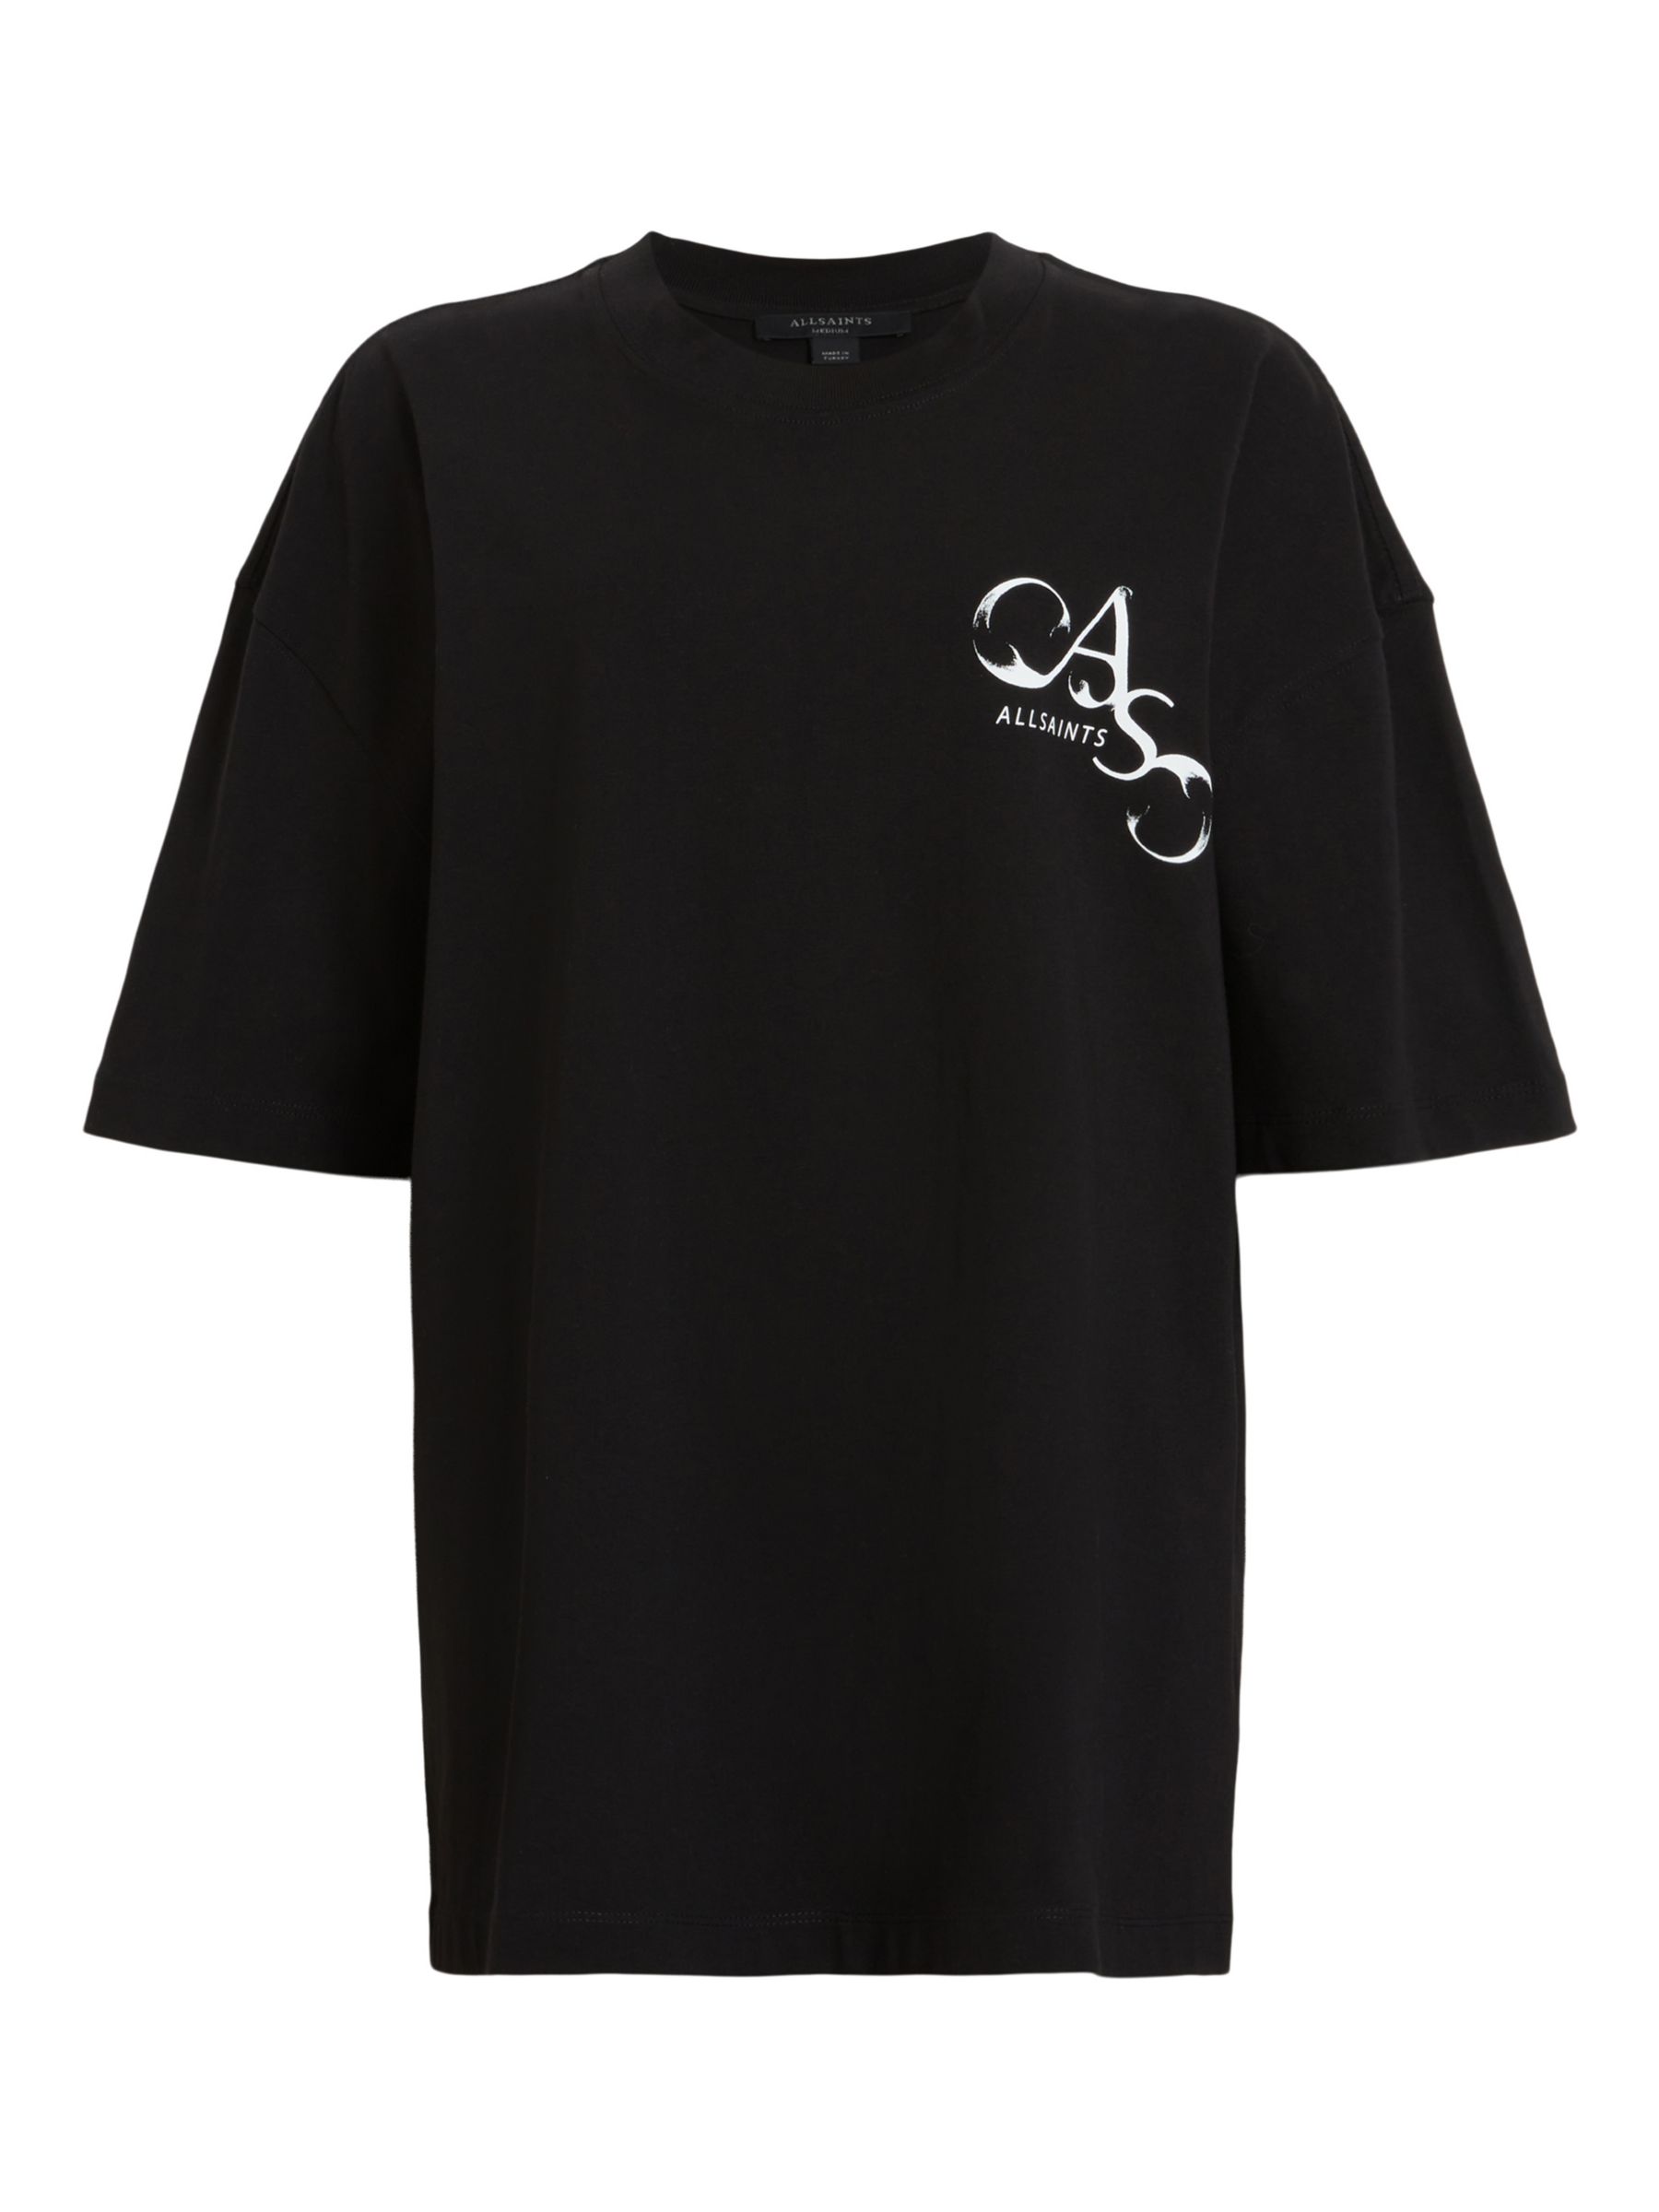 AllSaints Moments Organic Cotton T-Shirt, Black at John Lewis & Partners